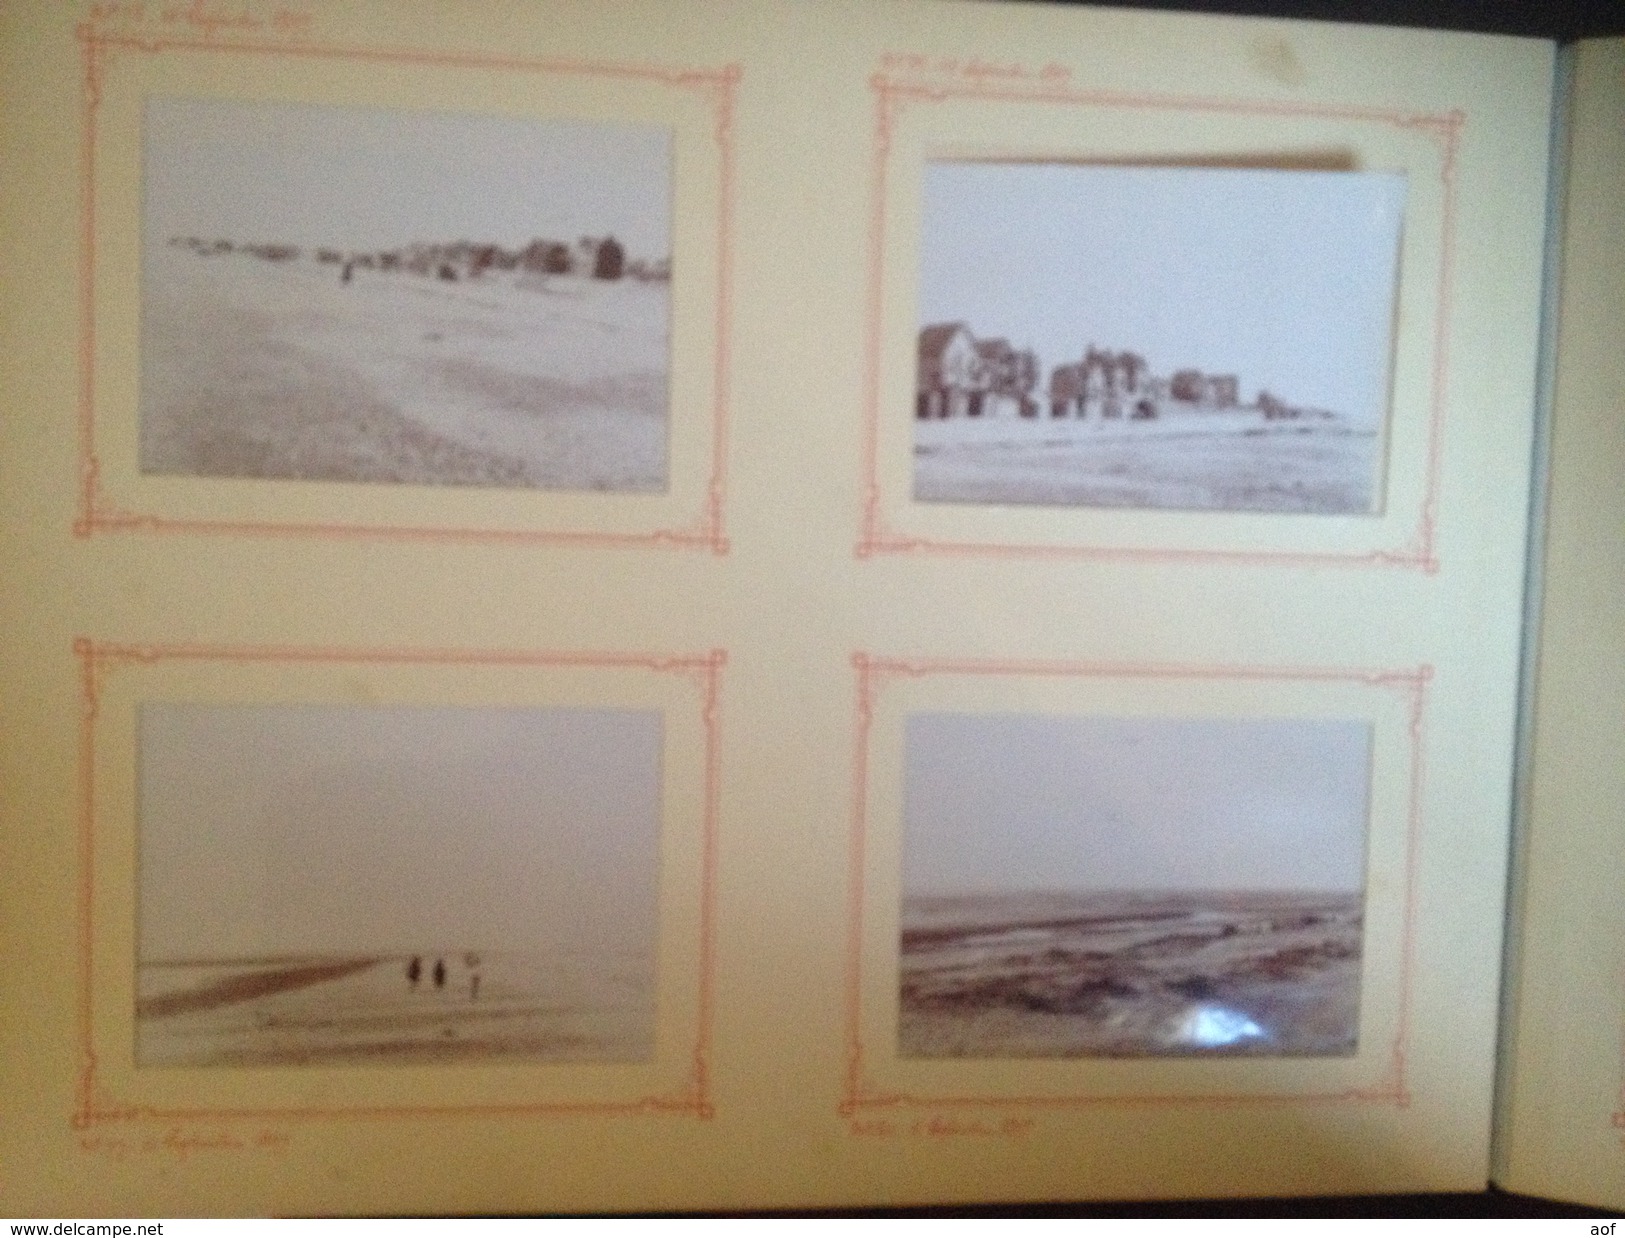 Album de famille - 184 photos de 1897